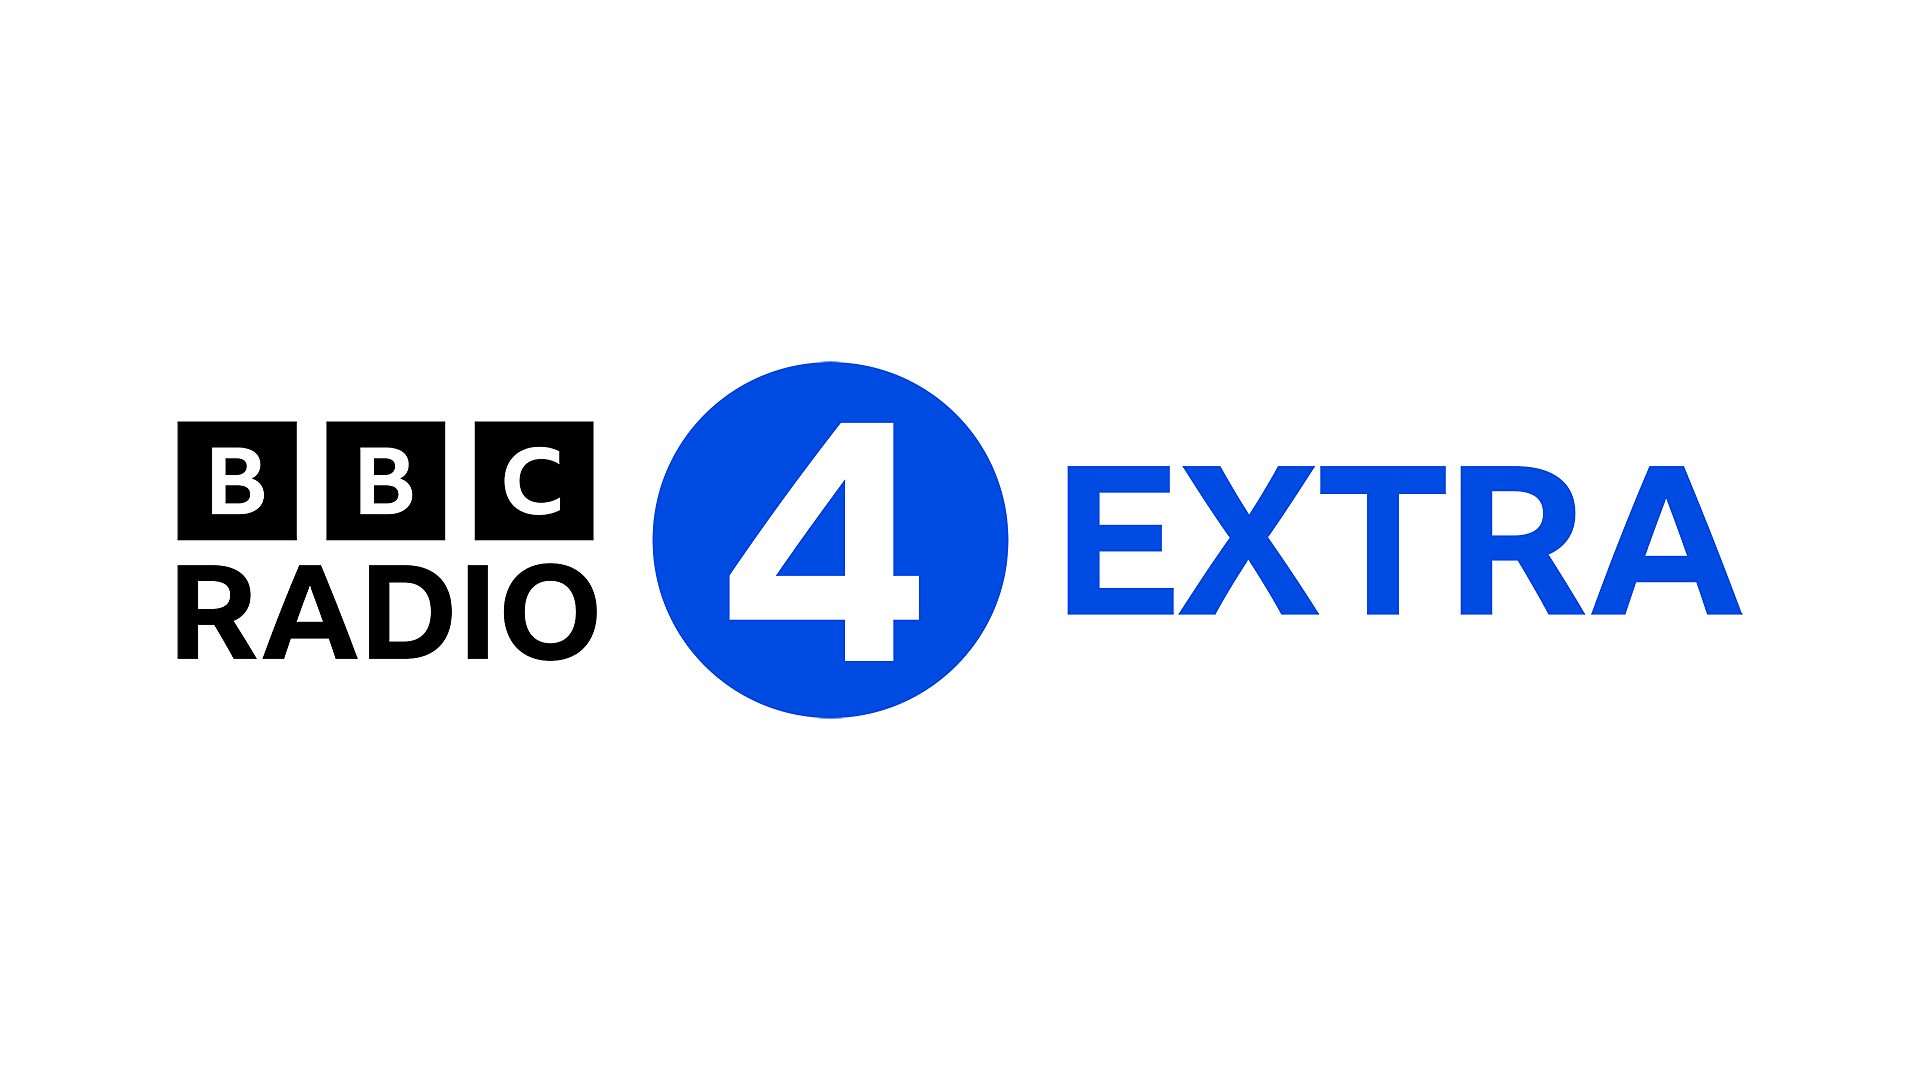 næve retort Shah BBC - About Radio 4 Extra